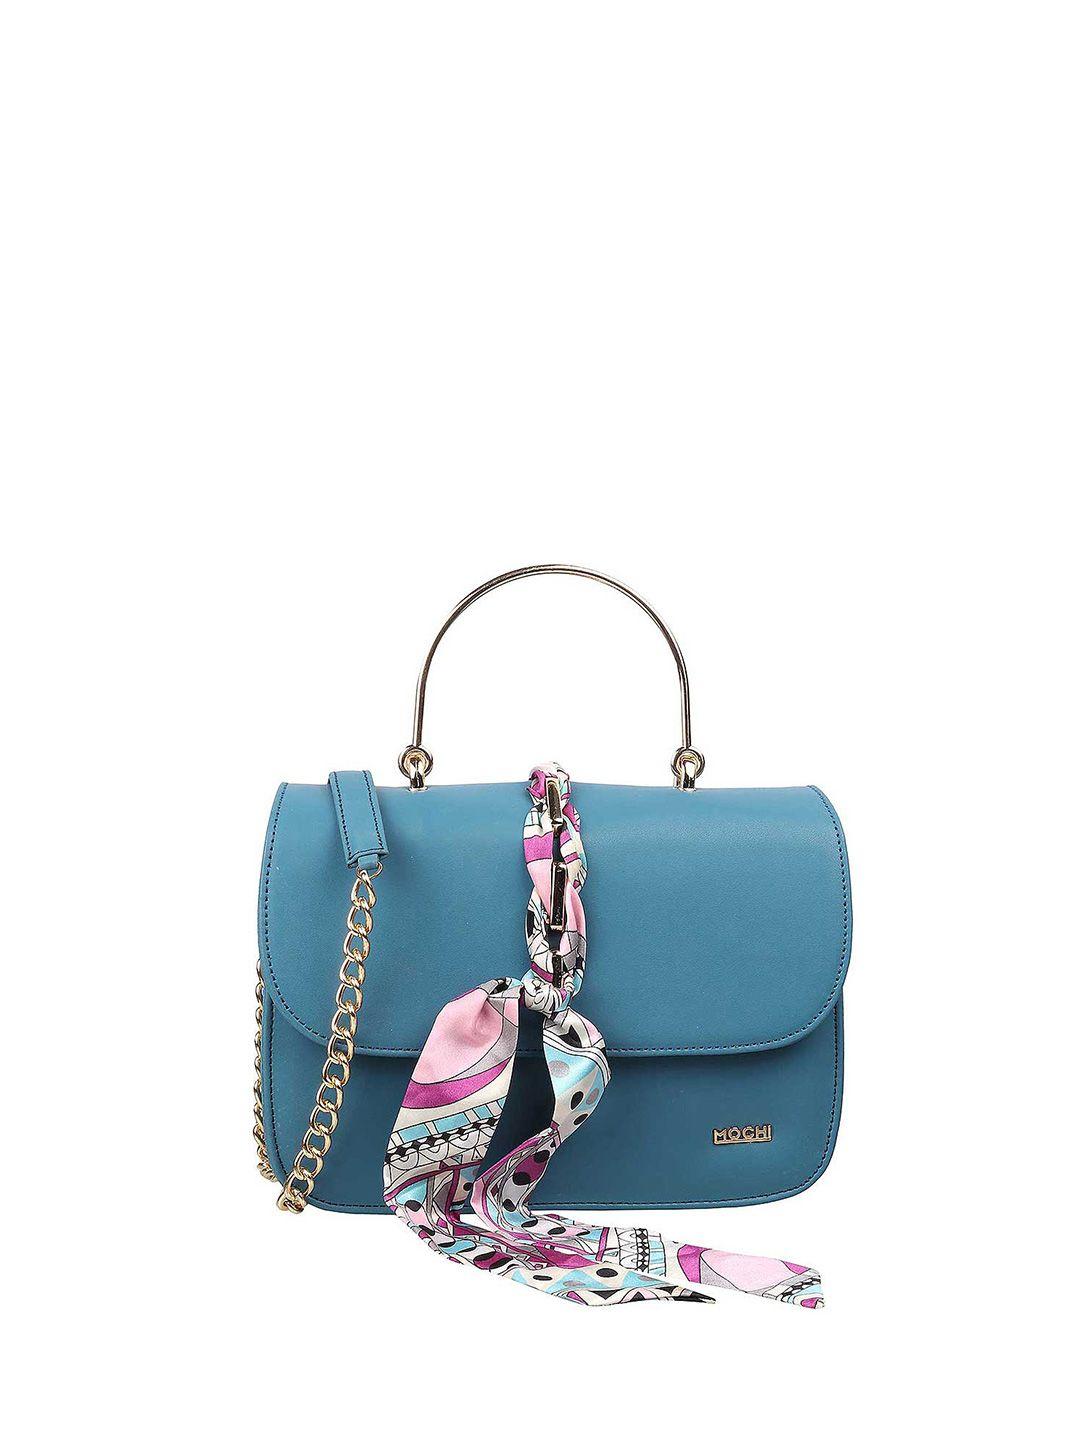 mochi blue & pink purse clutch